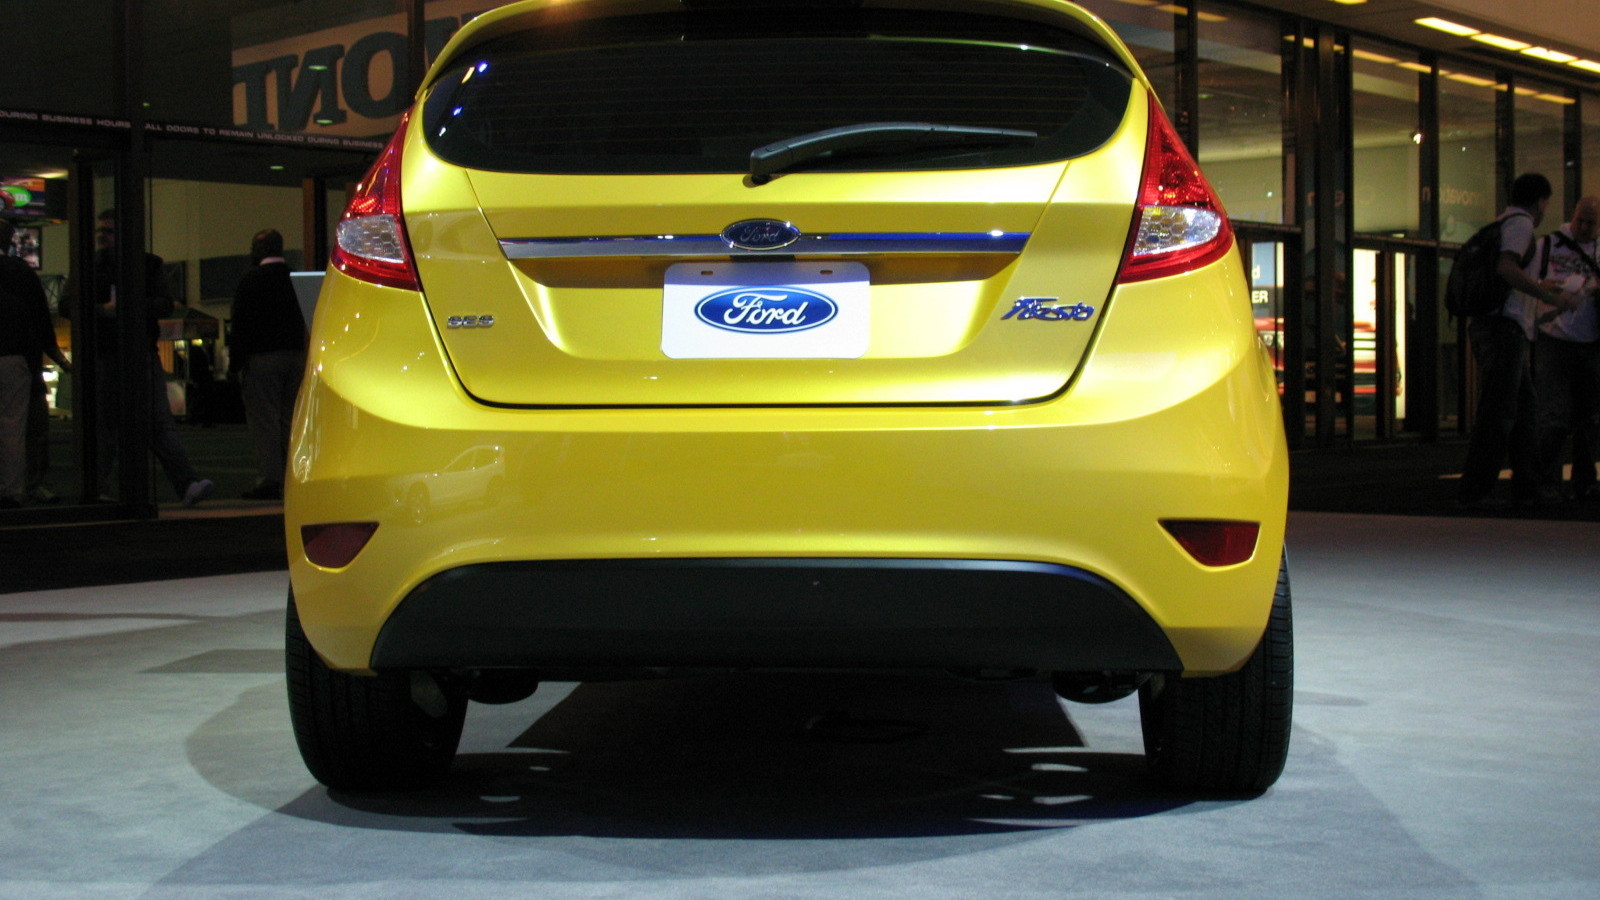 2011 Ford Fiesta